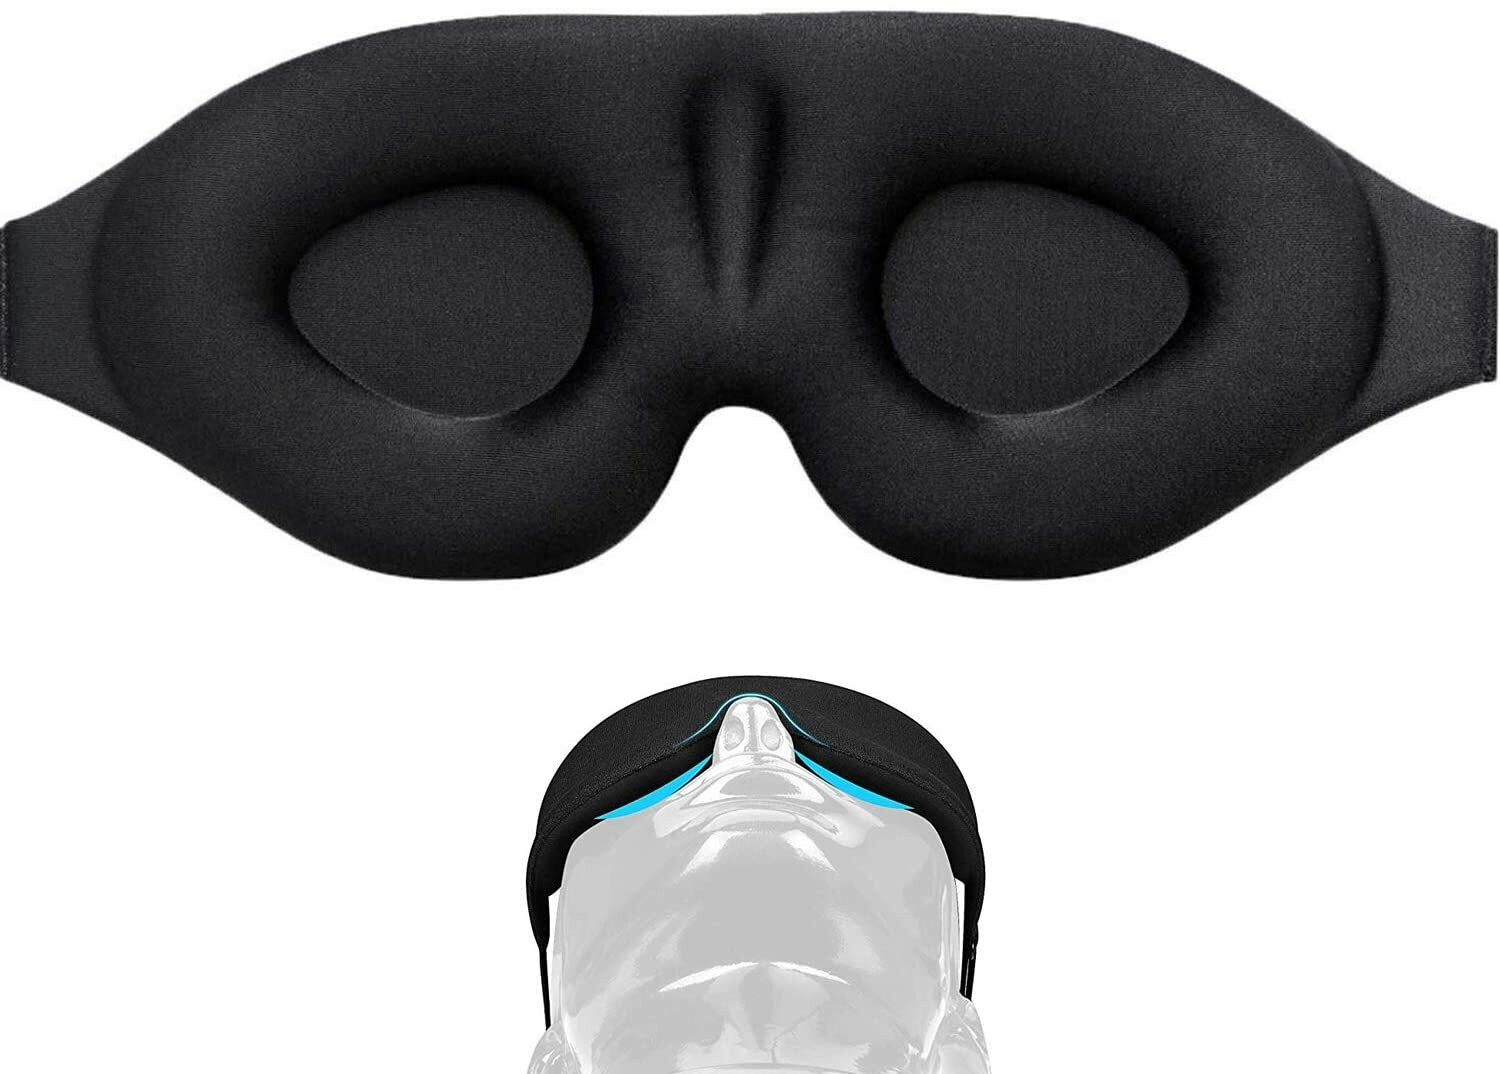 3D アイマスク 立体型 軽量 遮光 安眠マスク 柔らかい 男女兼用 圧迫感なし 付け心地良い 眼精疲労の軽減 光を完全に遮断 長さが調節で..